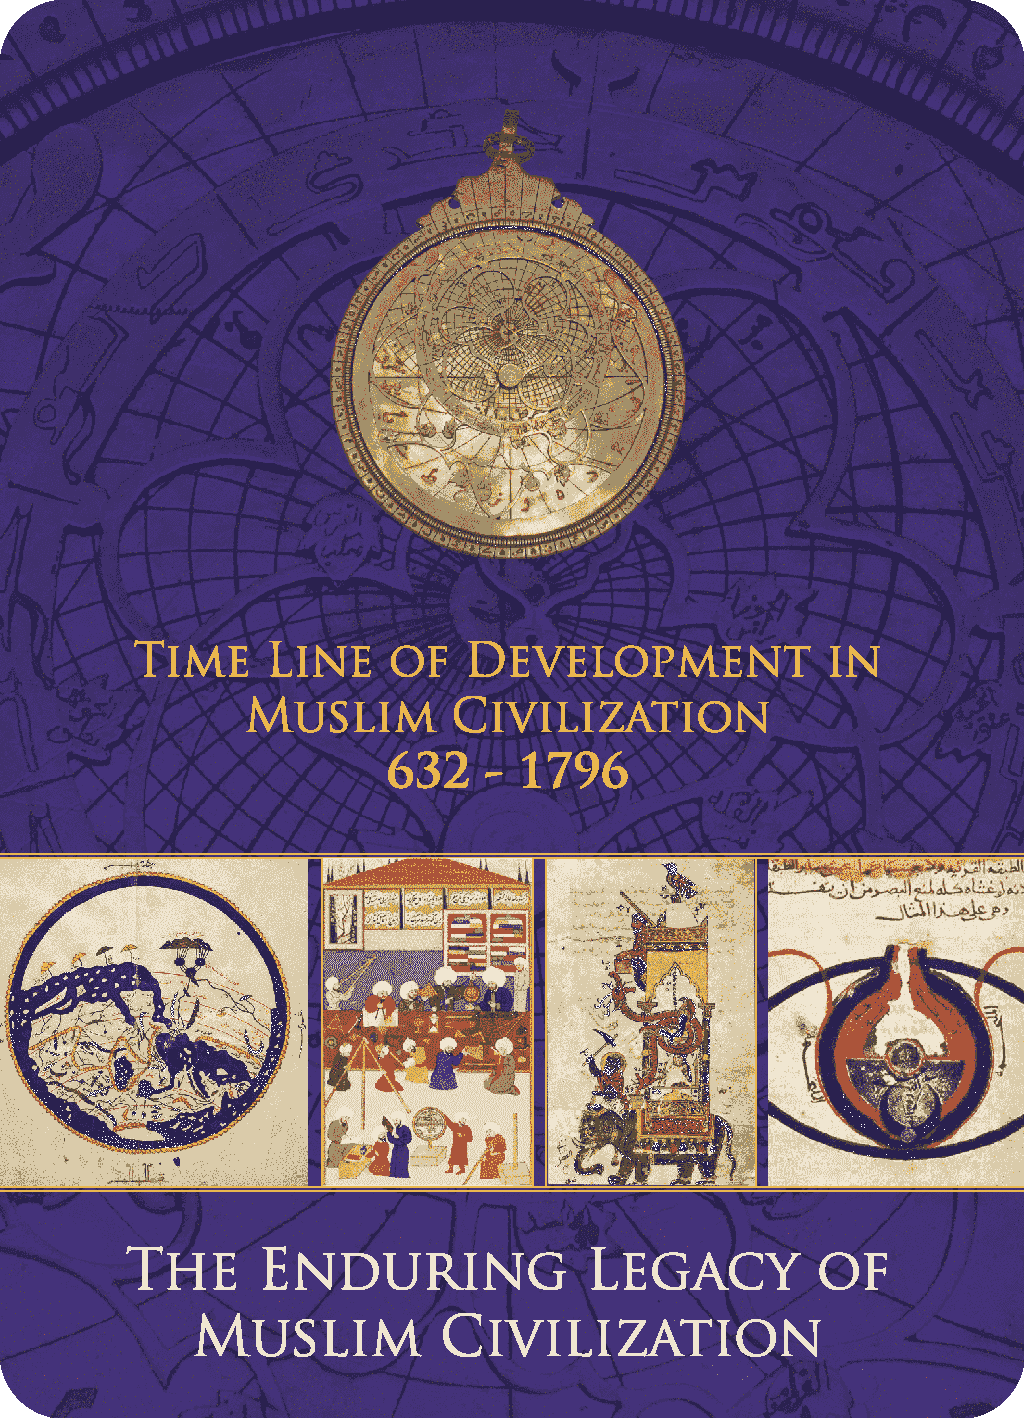 Timeline of Development